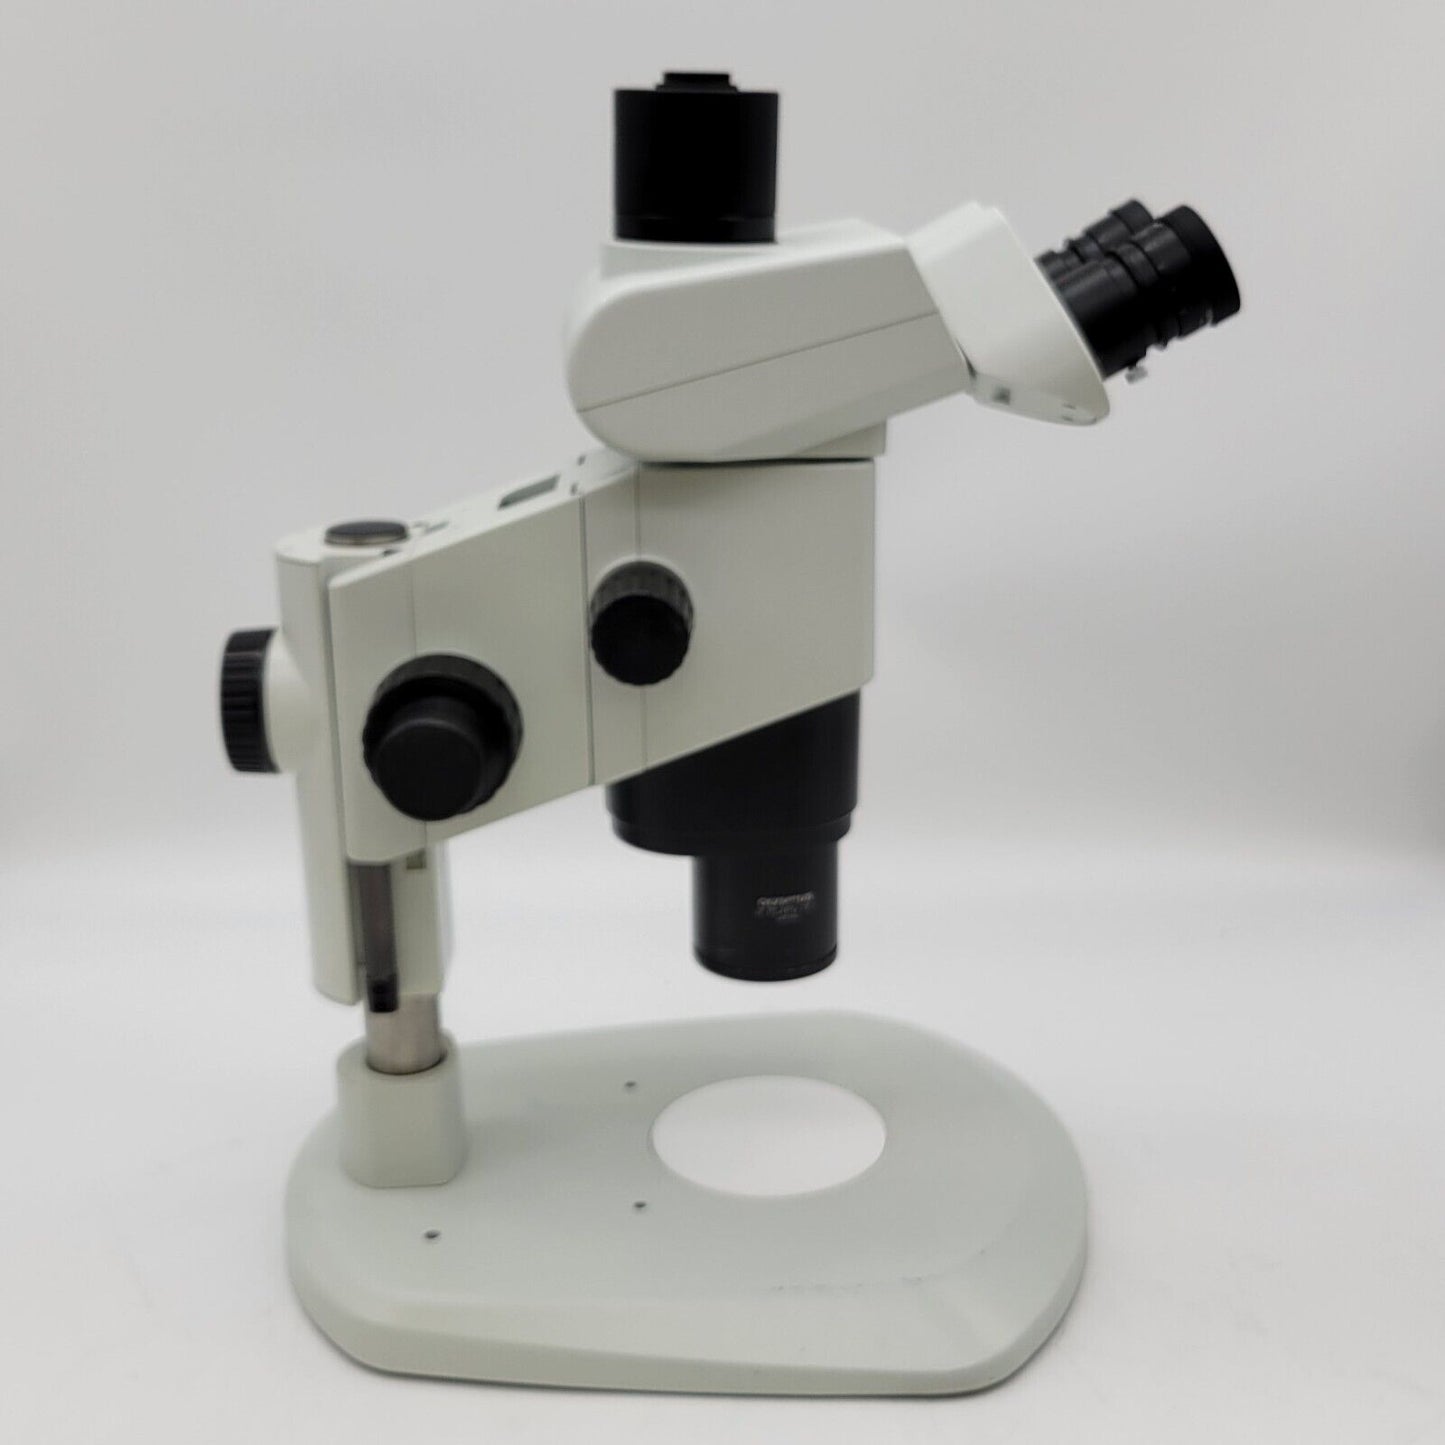 Olympus Stereo Microscope SZX9 with Trinocular Head - microscopemarketplace